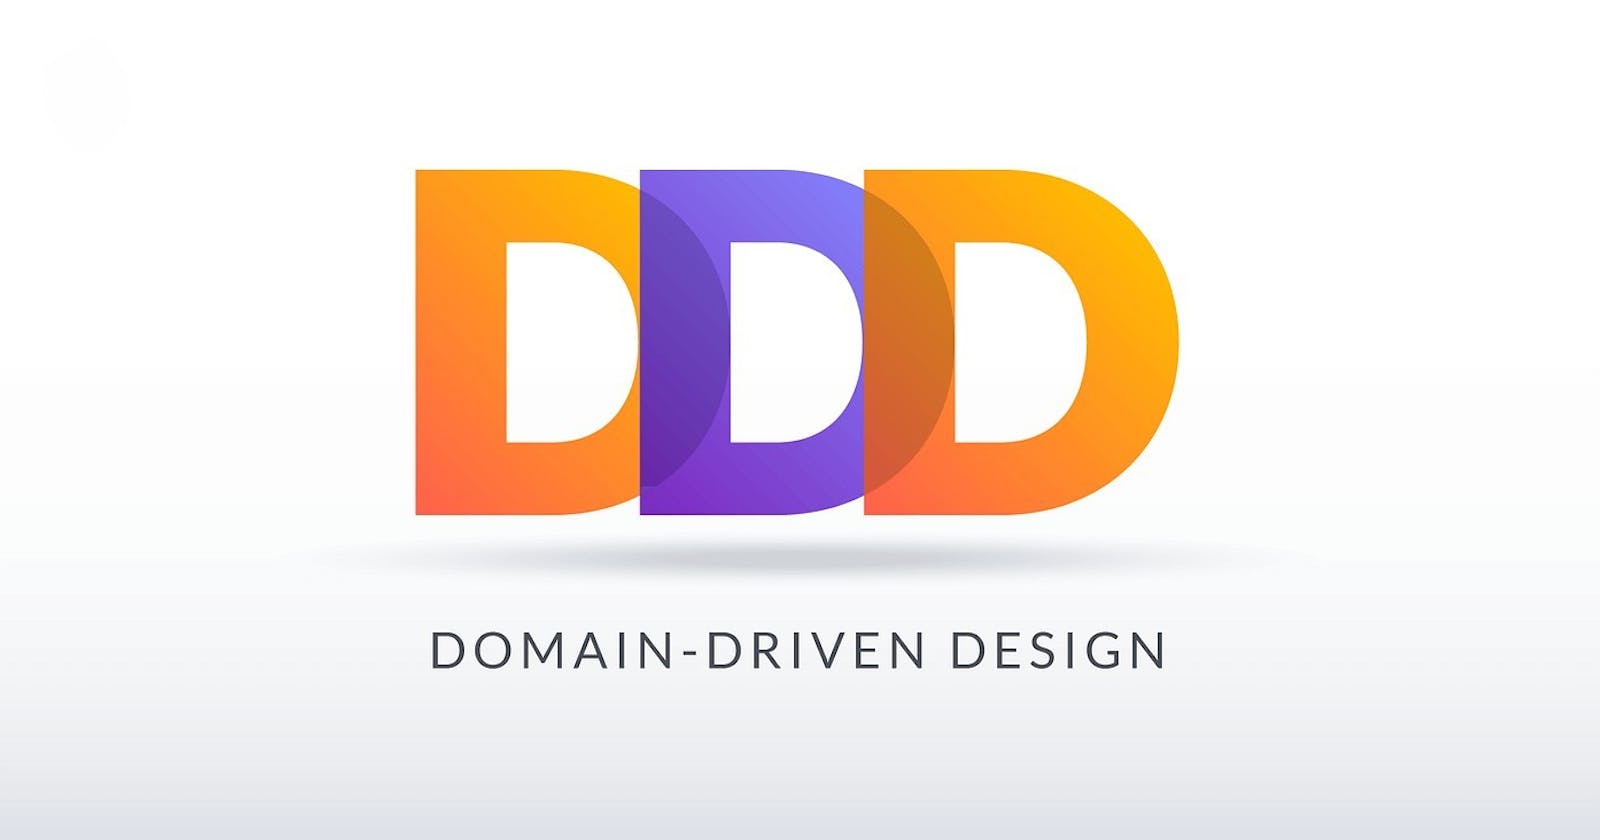 DDD: Application Services